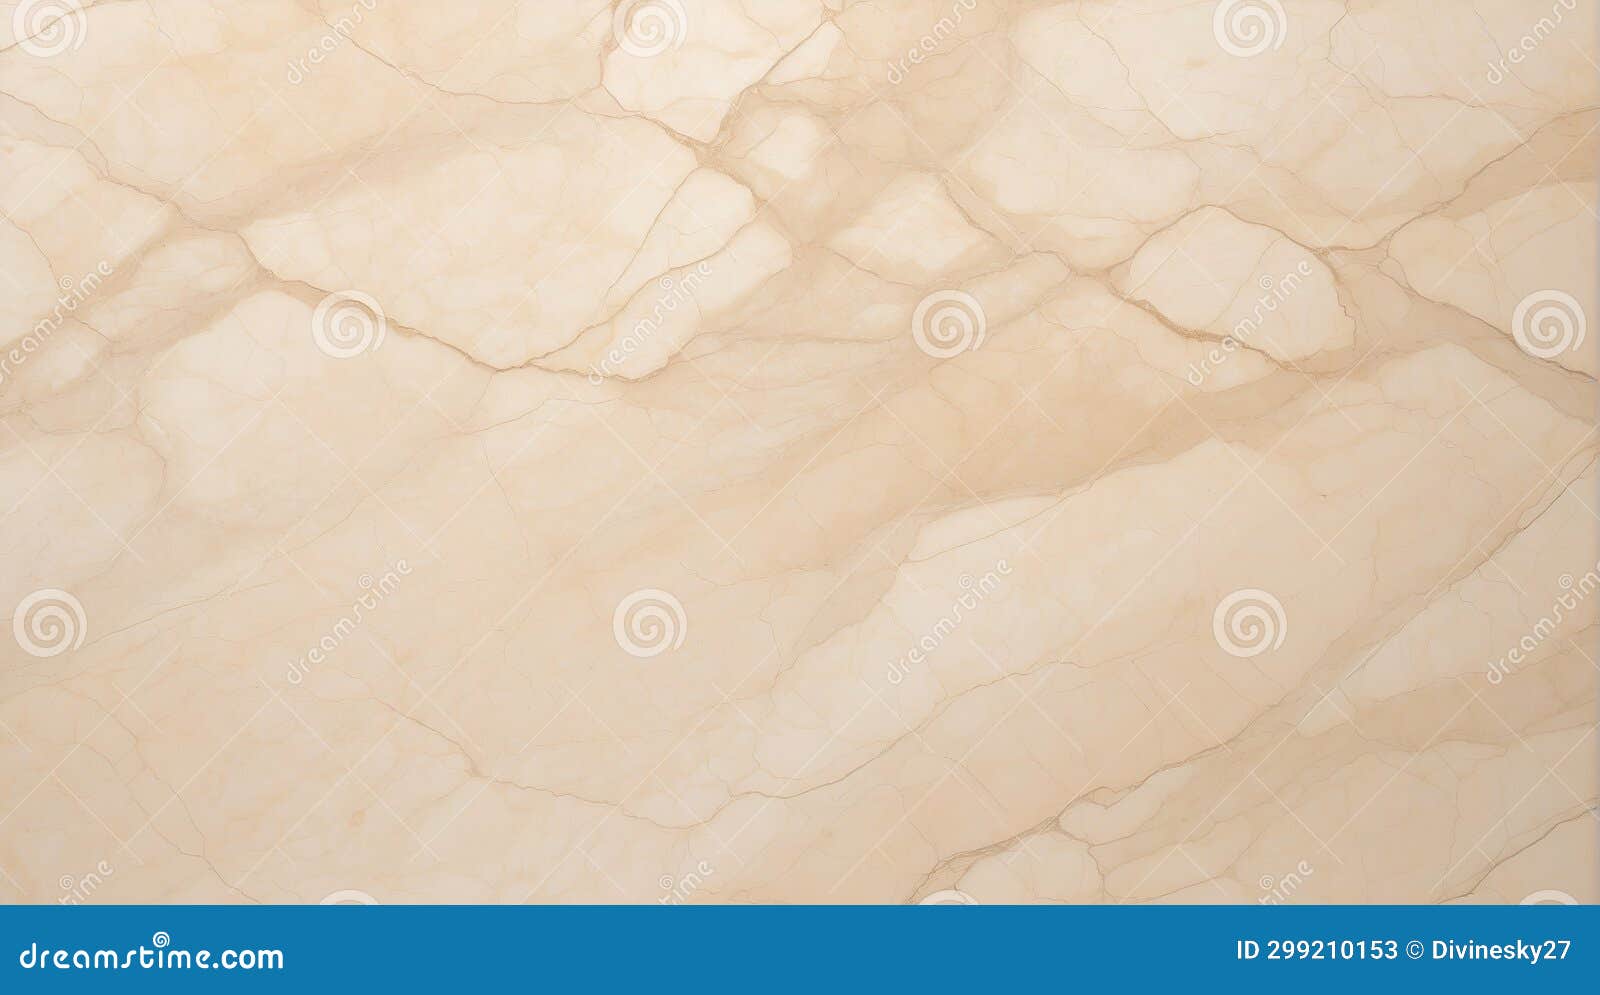 creamy canvas: crema marfil marble's subtle versatility. ai generate